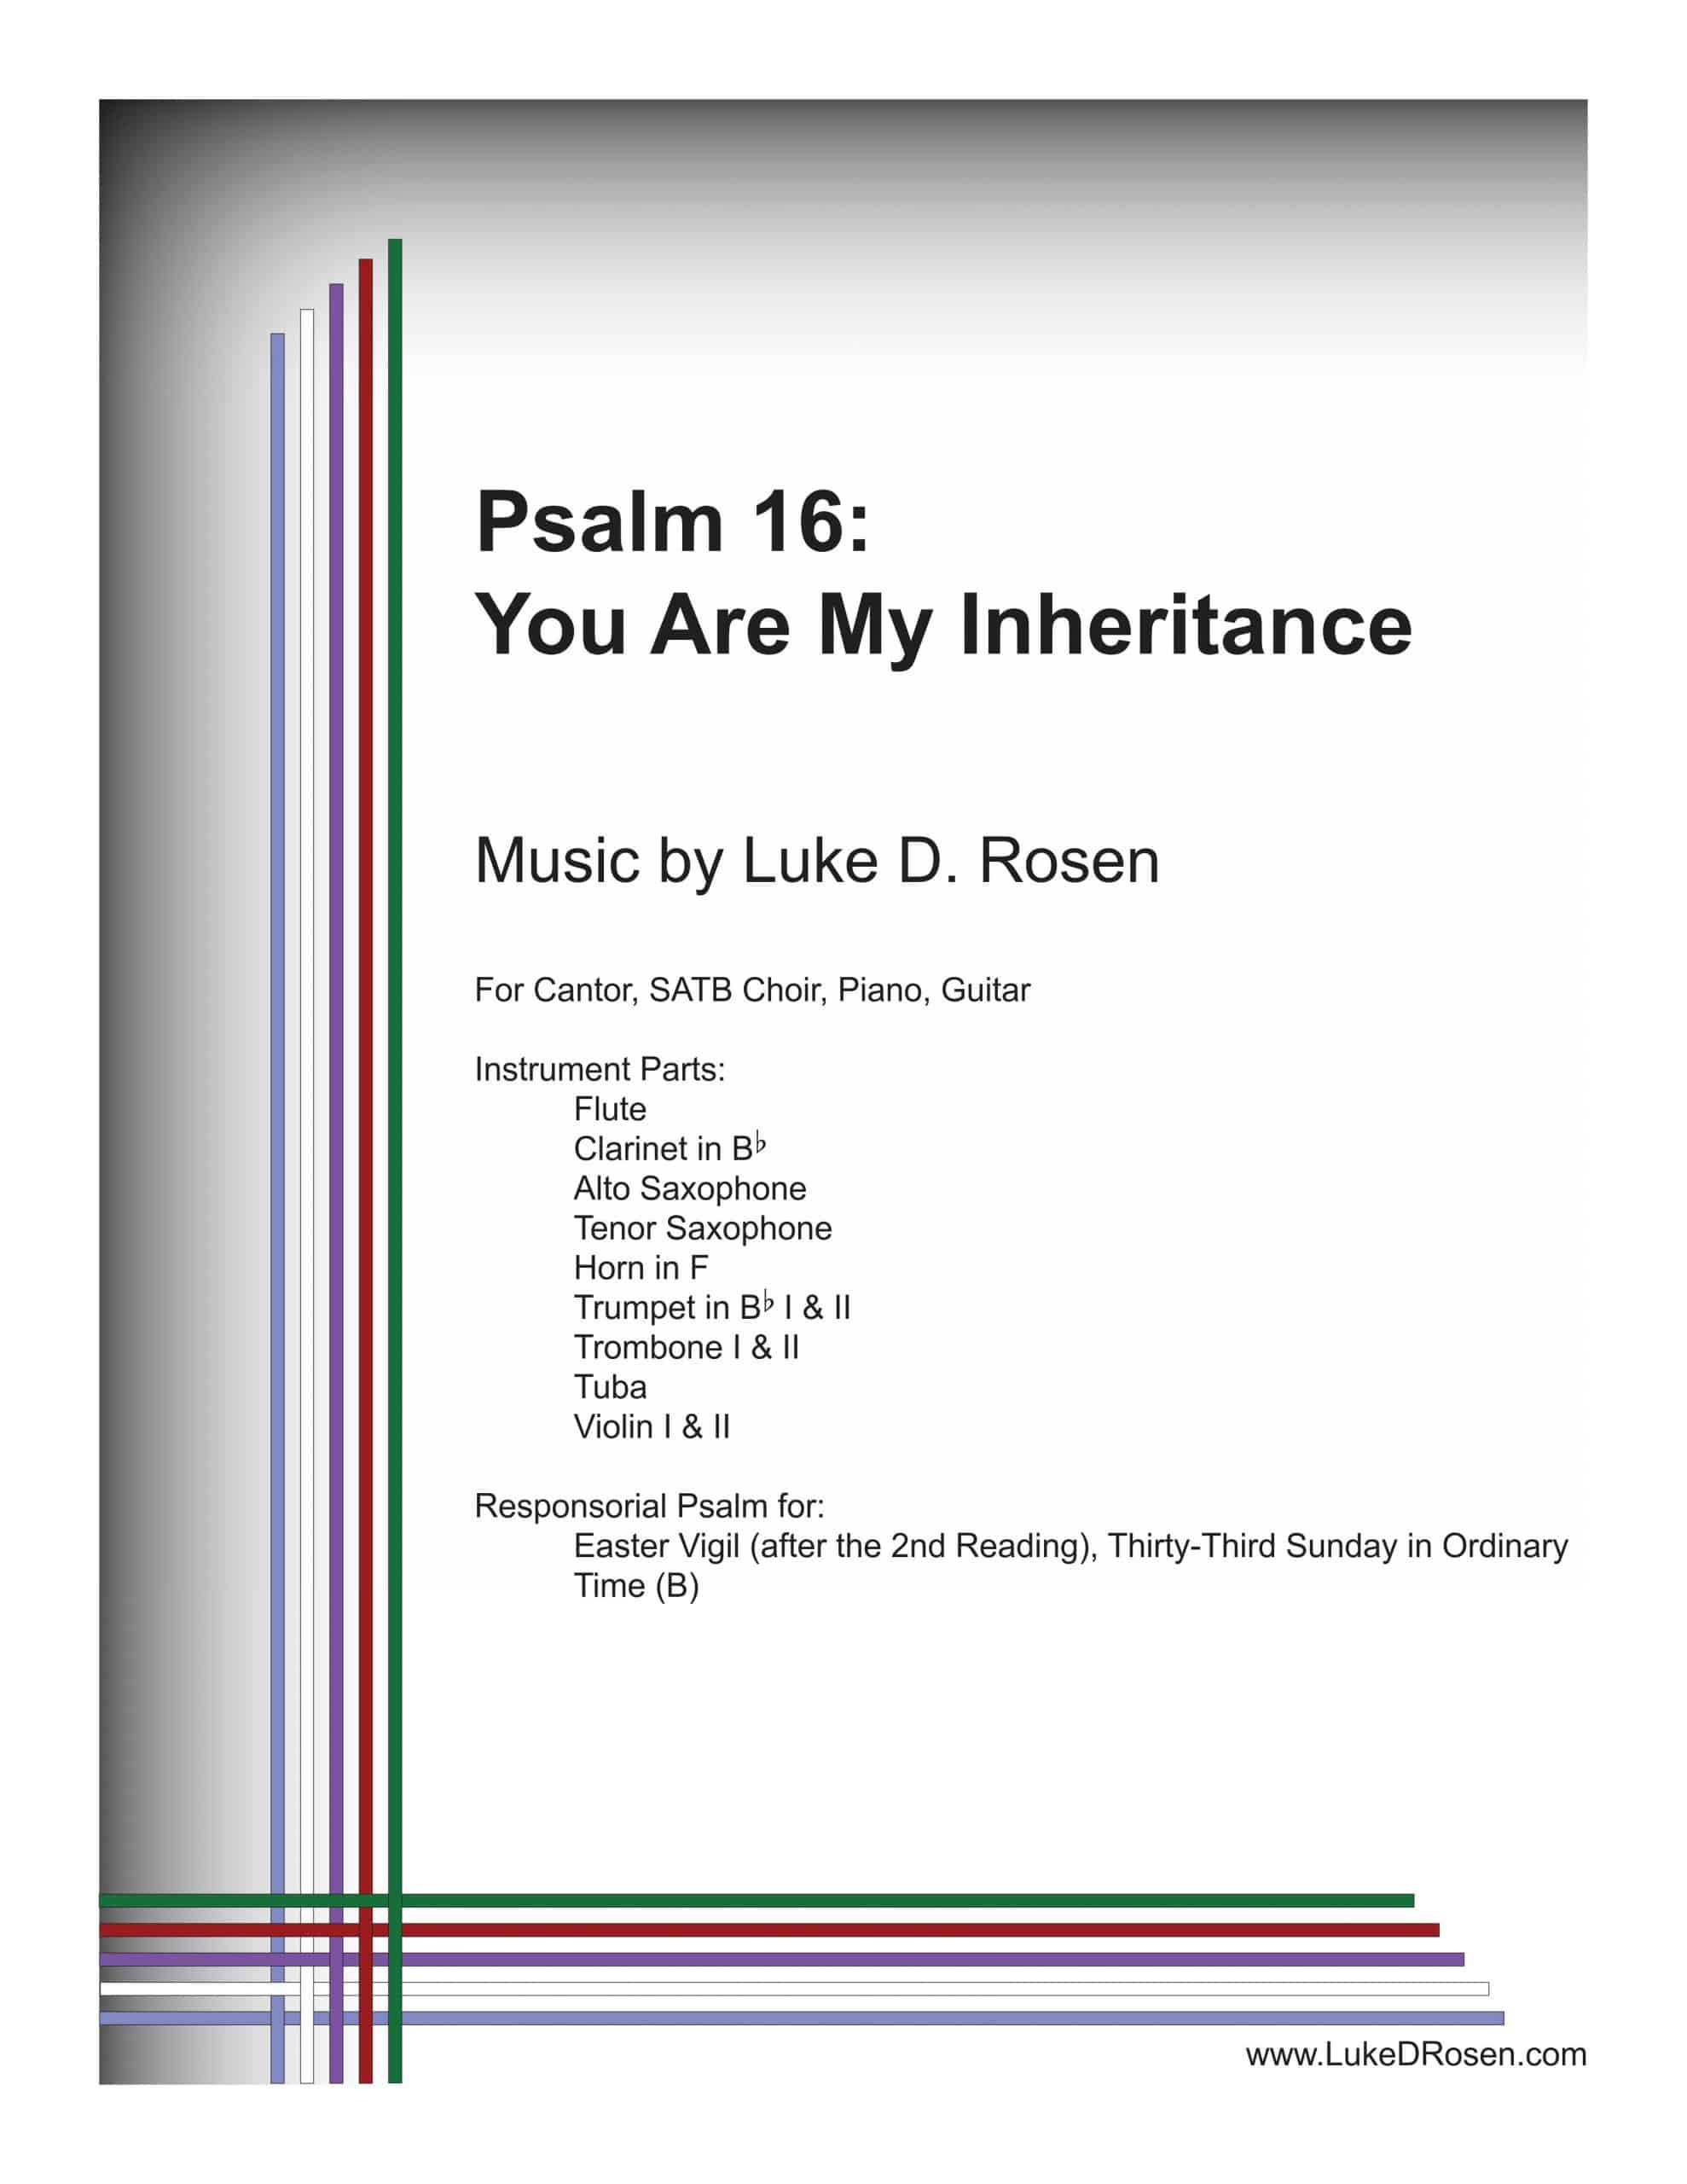 Psalm 16 – You Are My Inheritance (Rosen)